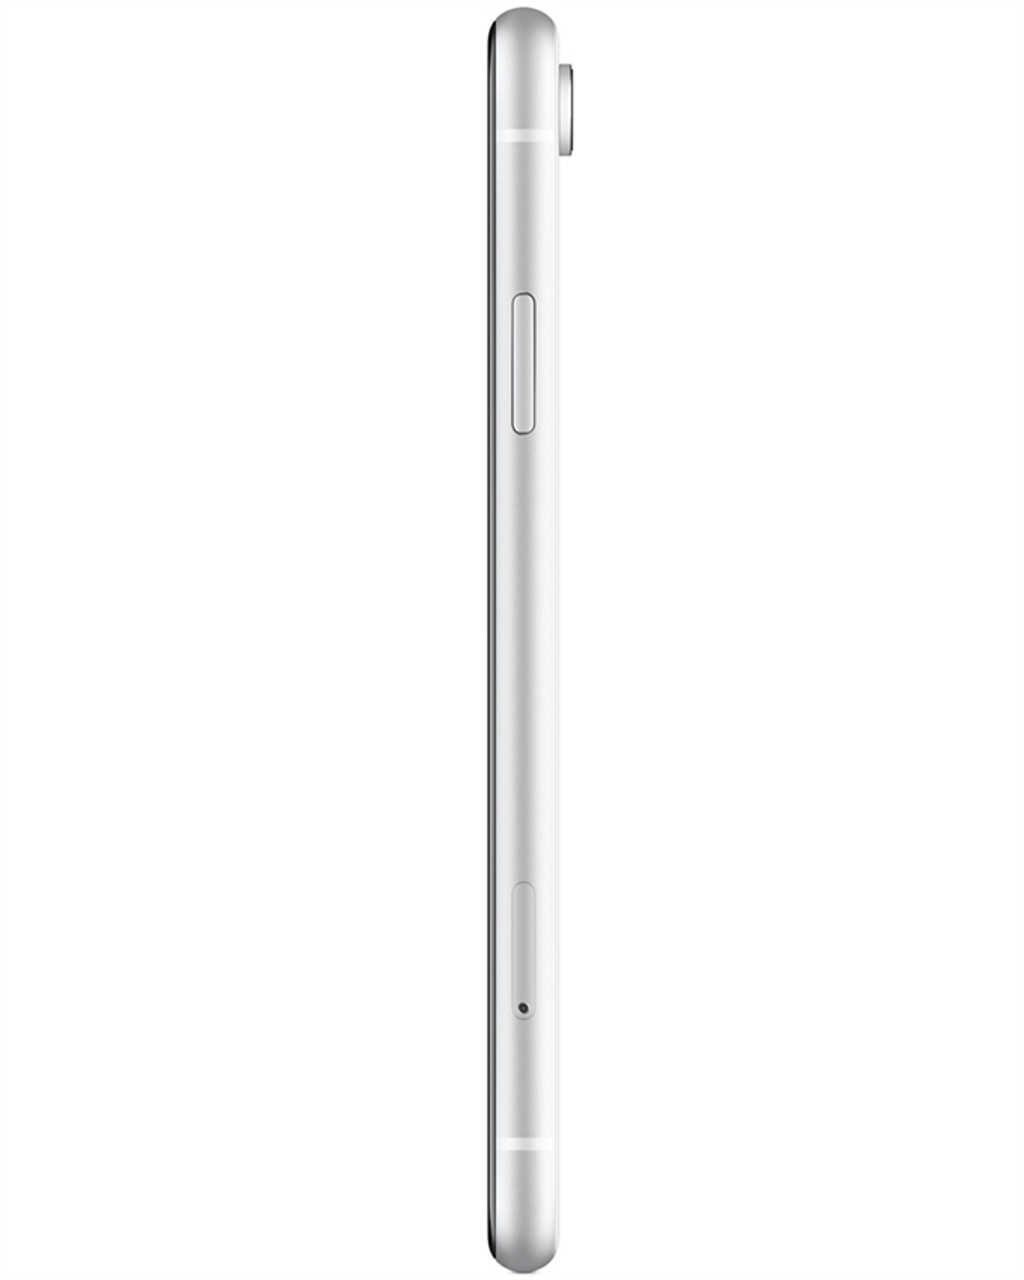 Apple iPhone XR 128GB Unlocked Smartphone - Very Good